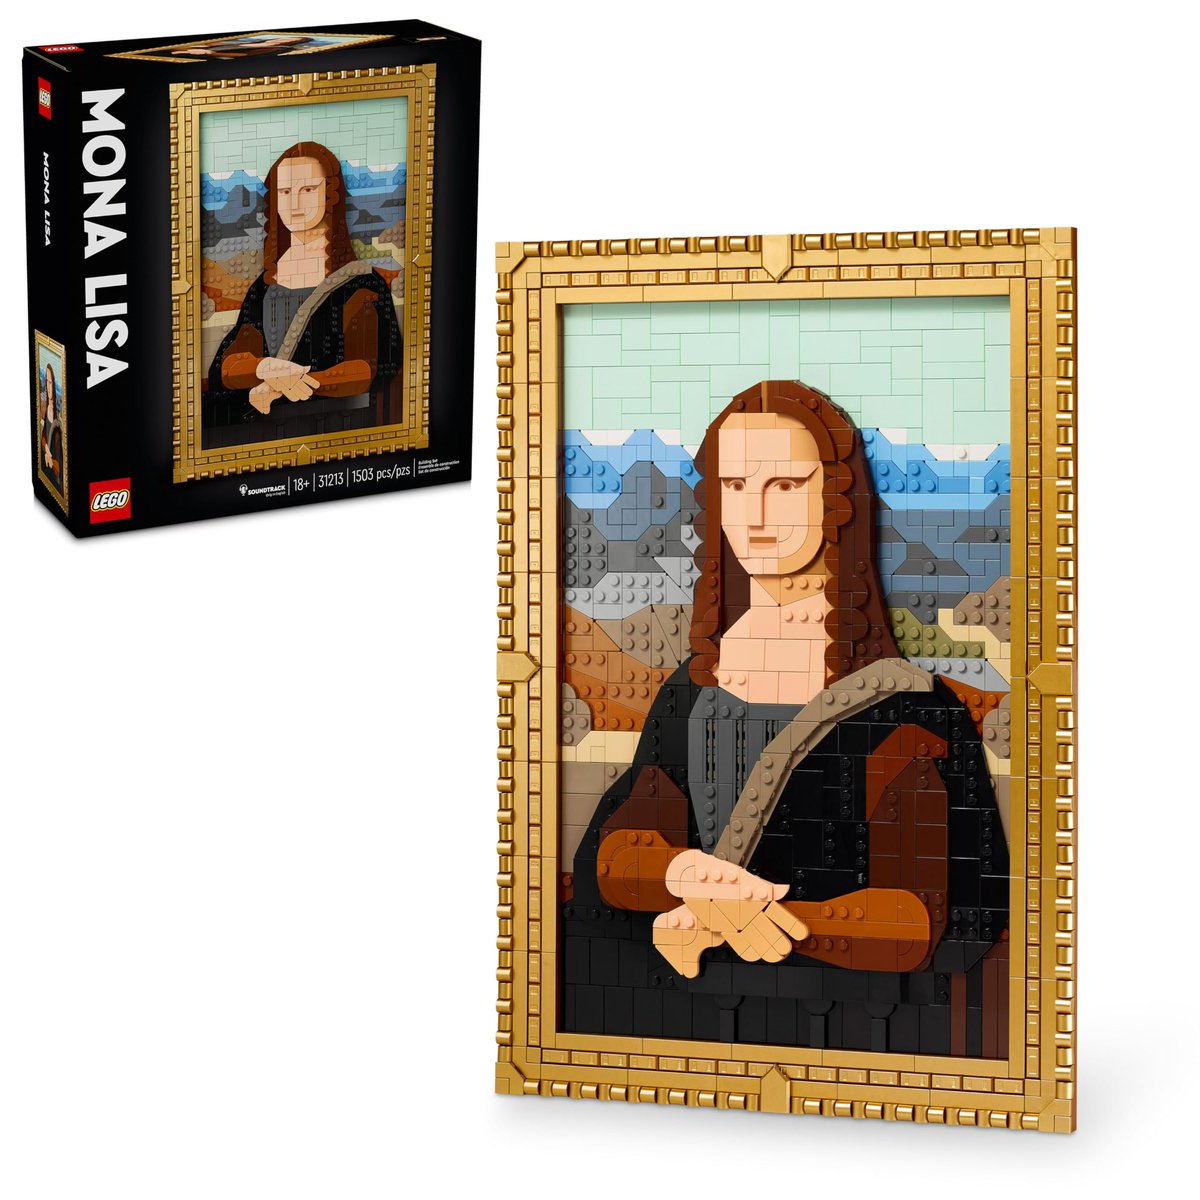 Preorder Now: Lego Mona Lisa at Amazon! #Ad #Lego #MonaLisa #Collectibles . amzn.to/4brp2jF